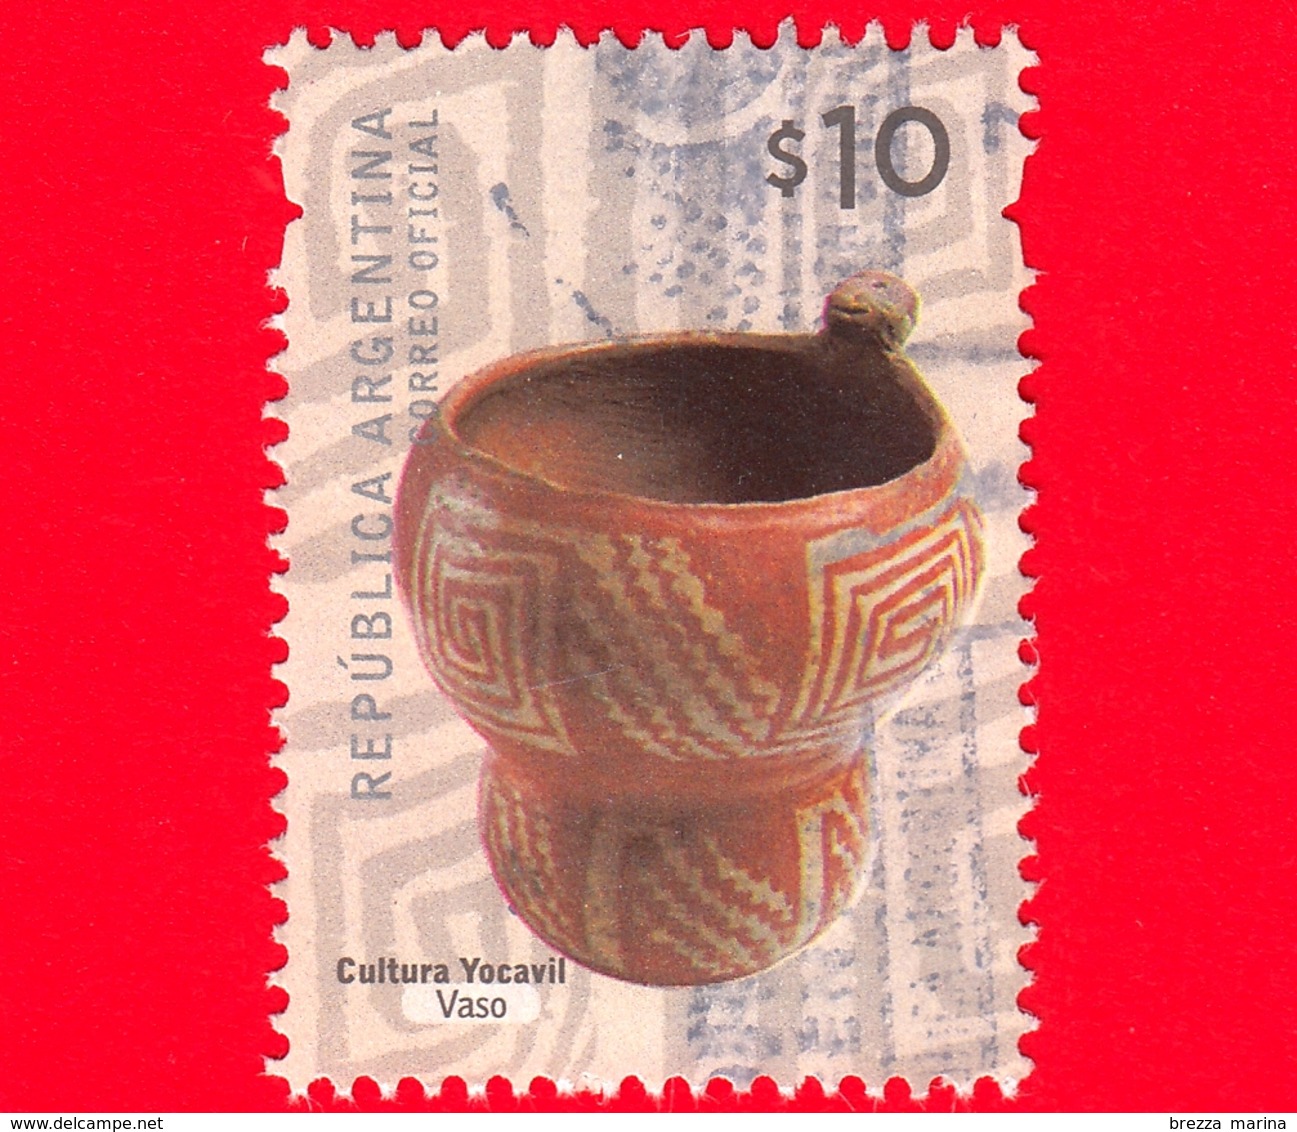 ARGENTINA - Usato - 2008 - Ceramica Cultura Yocavil - Vaso - $ 10 - Used Stamps